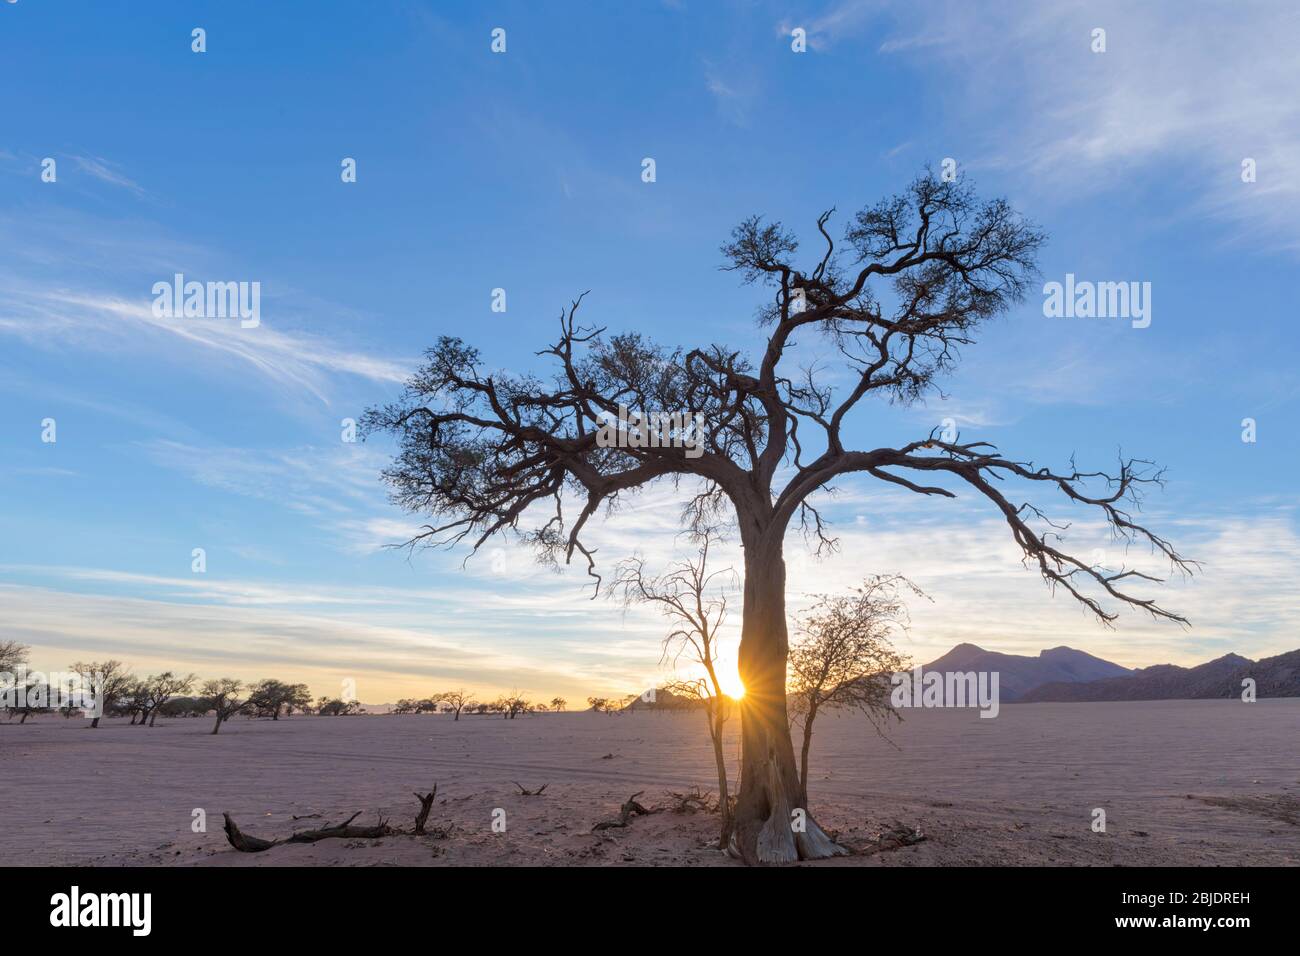 Acasia tree at sunrise Stock Photo